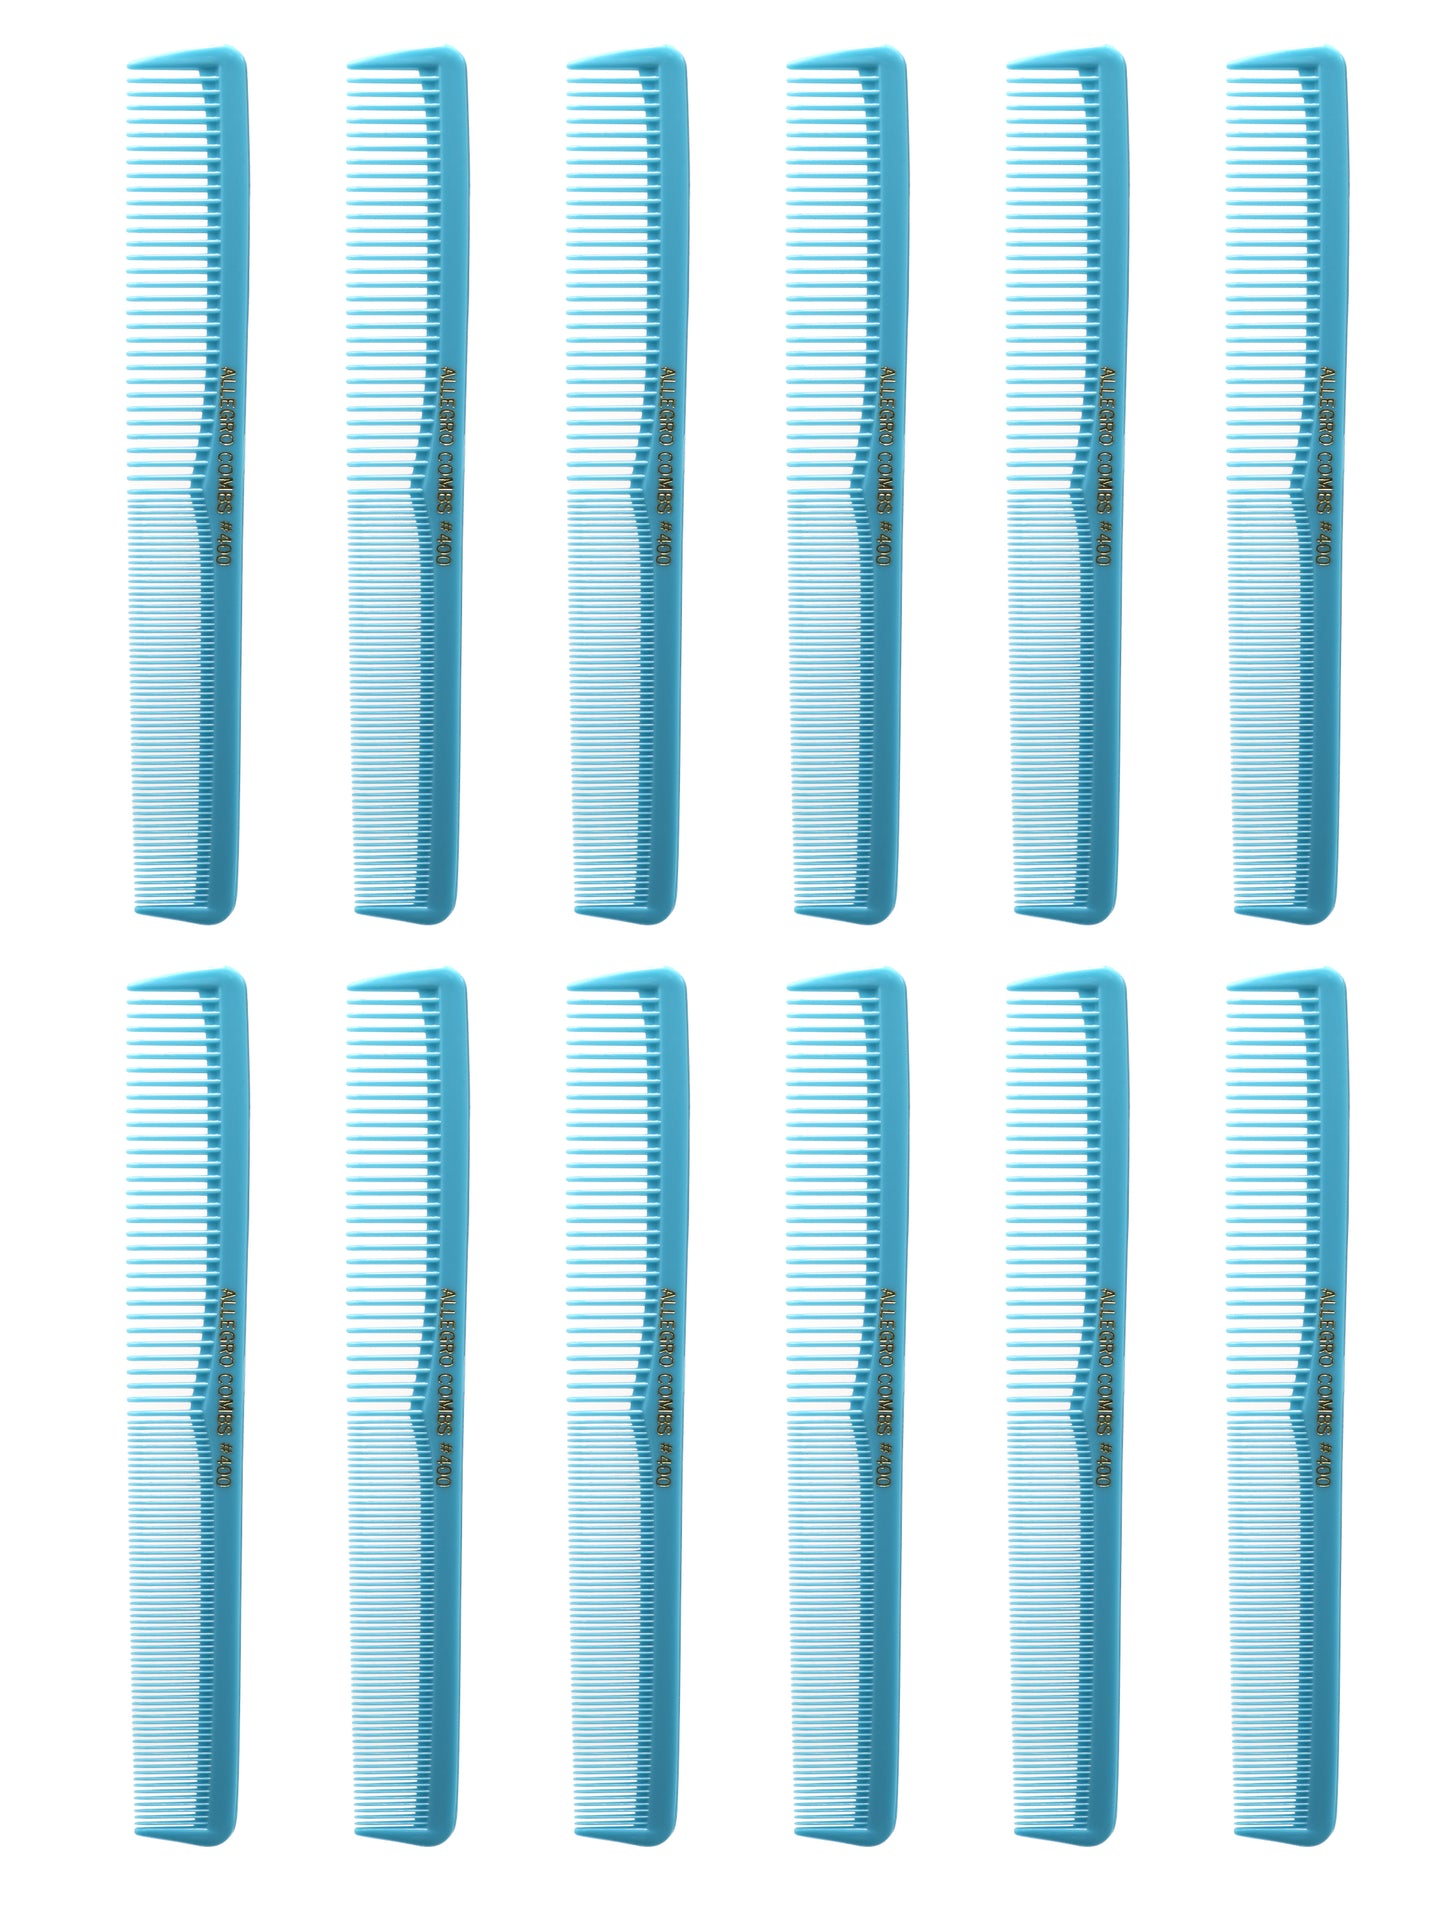 Allegro Combs 400 Barber Pocket Combs Cutting All Purpose Combs Light Blue Combs 12 Pk